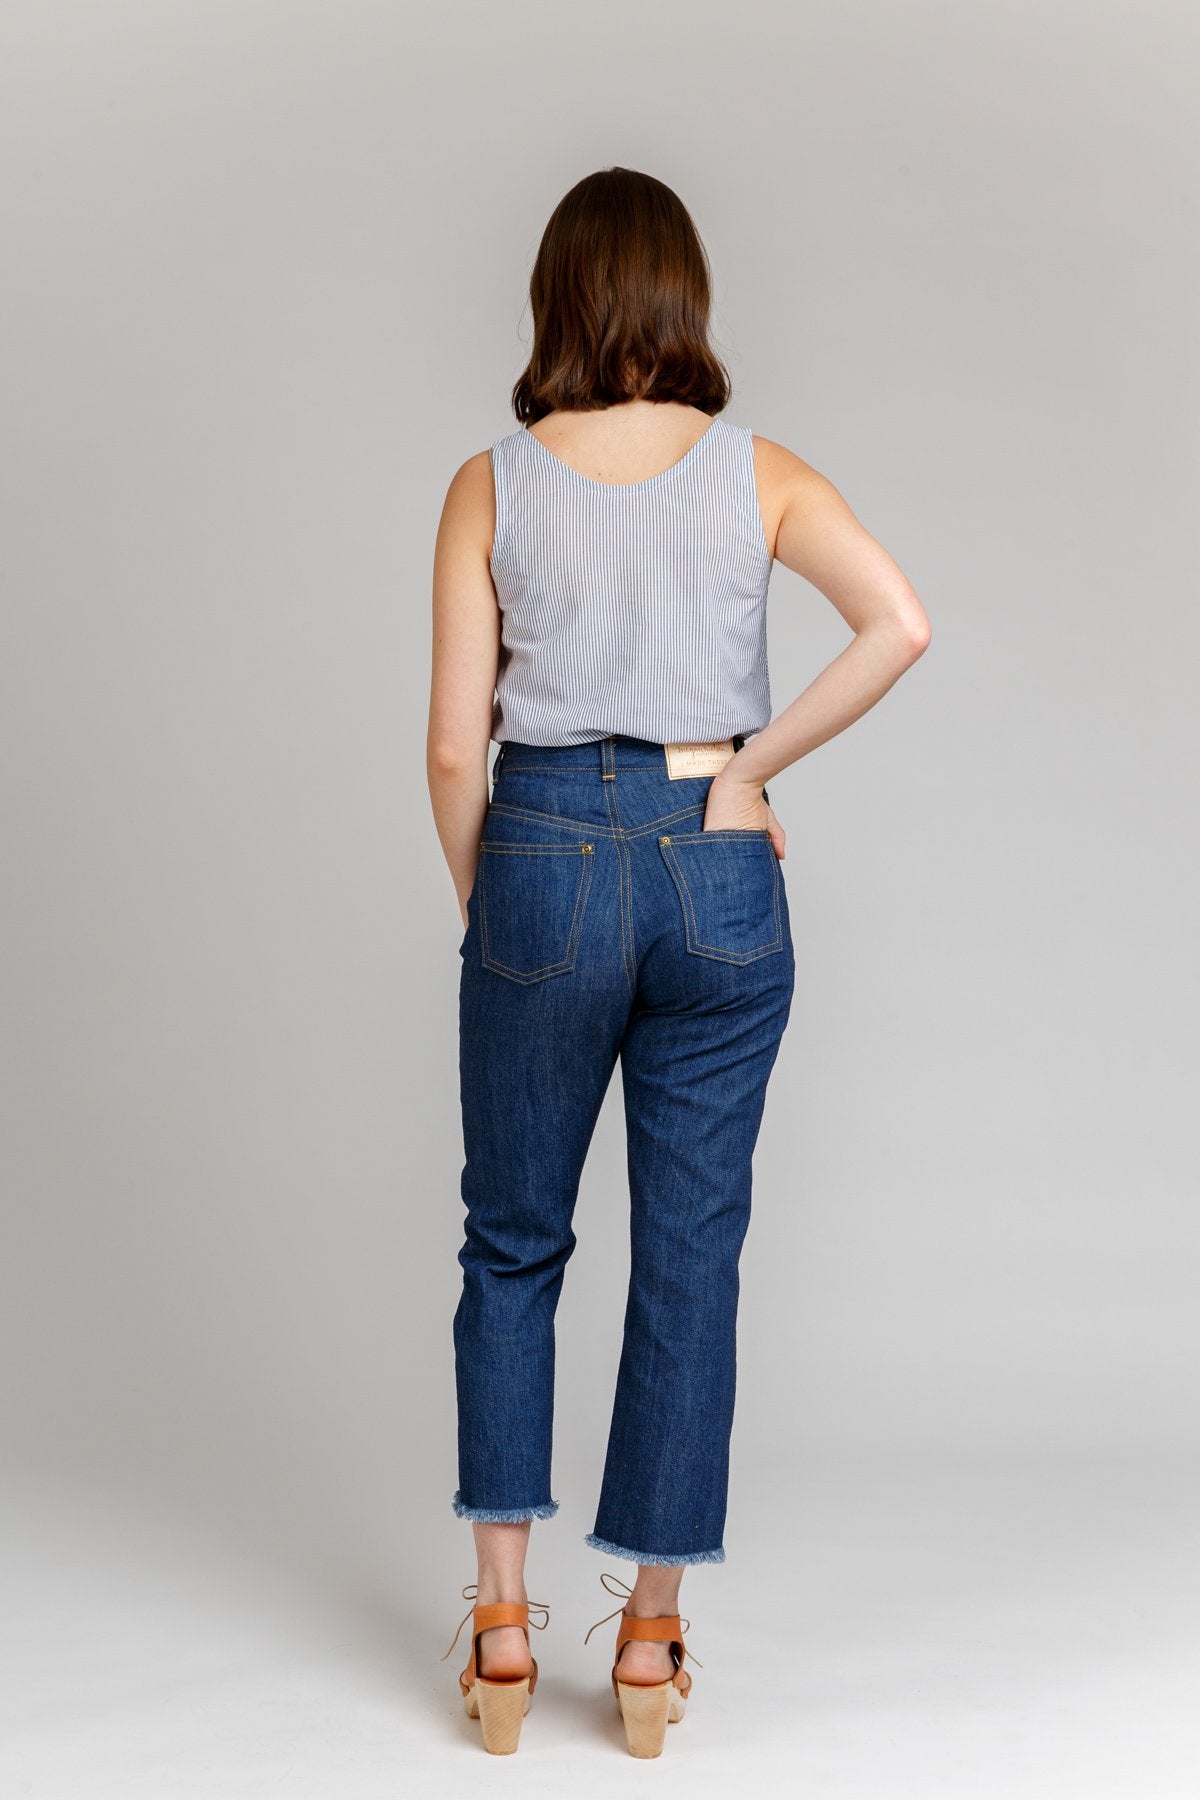 Megan Nielsen Patterns - Ash Jeans - Size 0-20 > Megan Nielsen